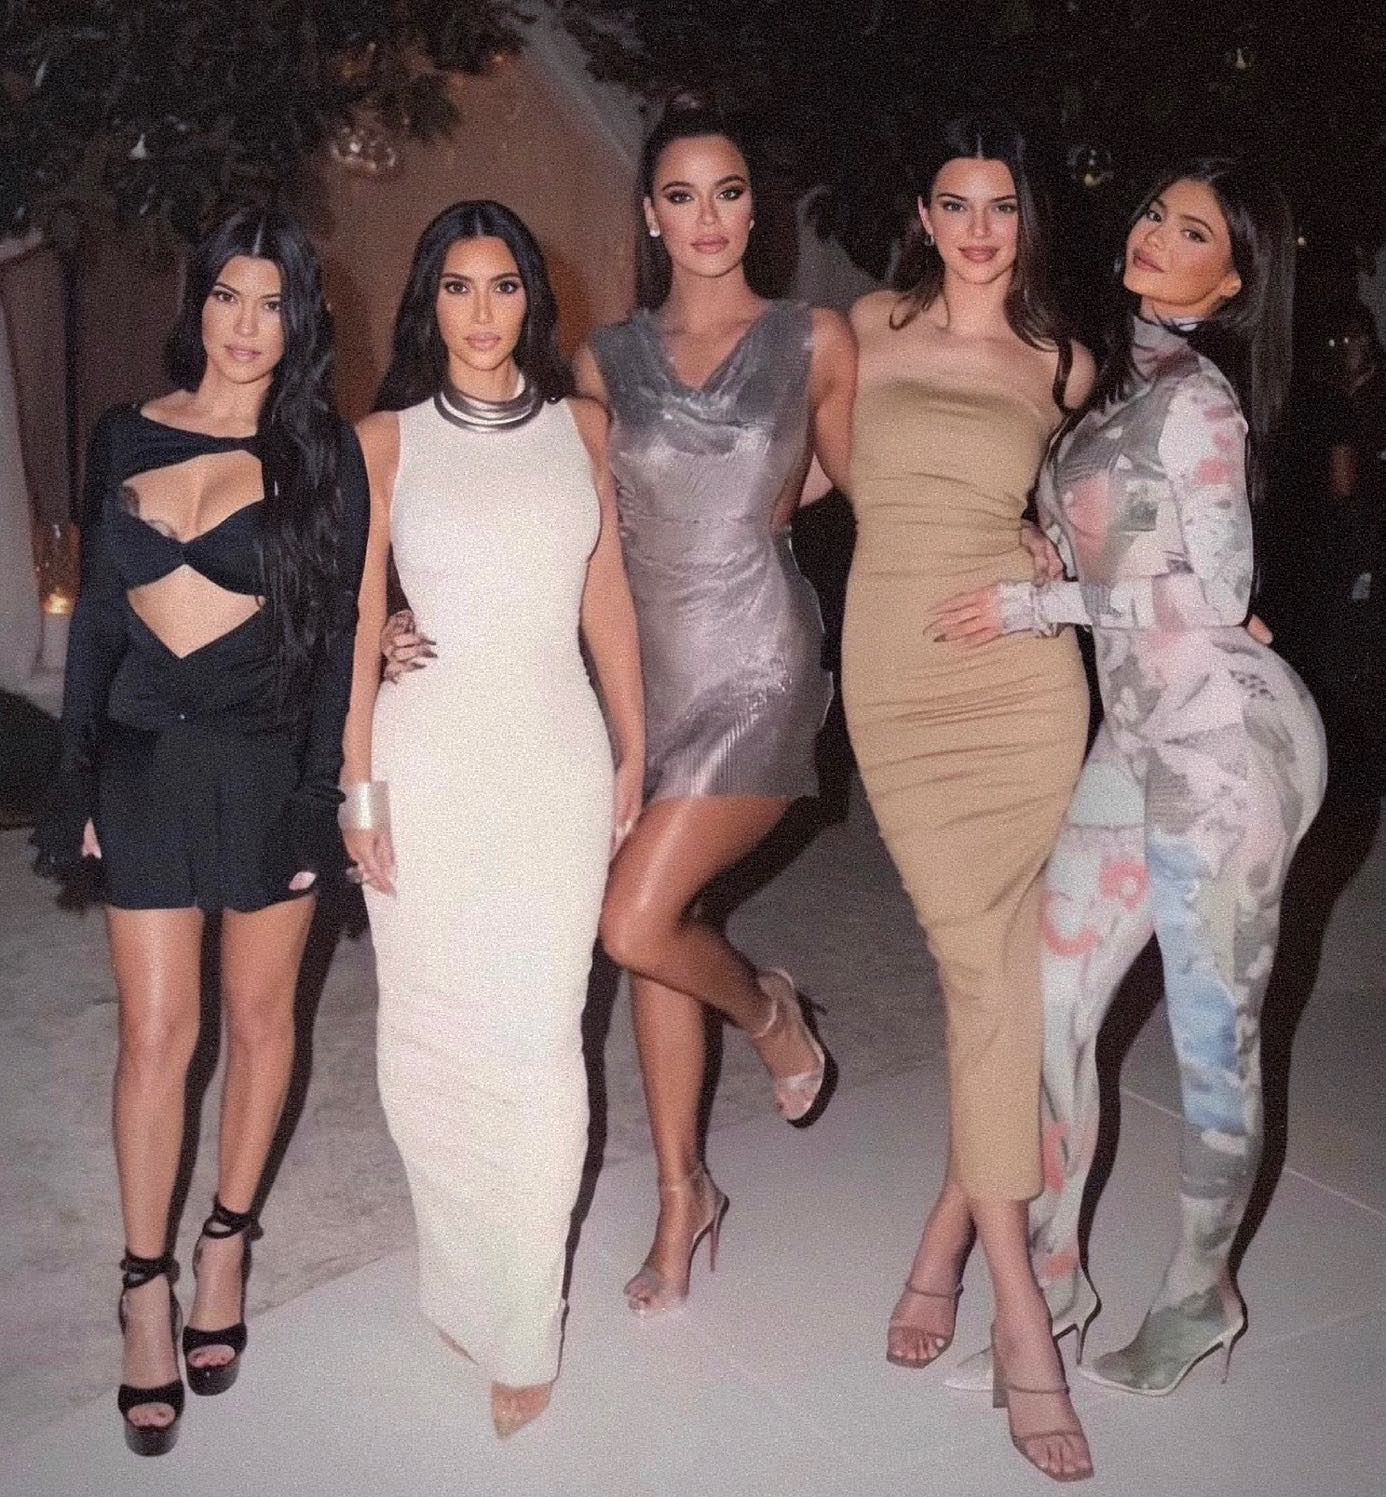 Kardashians Kourtney, Kim, Khloé, and Kendall and Kylie Jenner gathering for a group photo